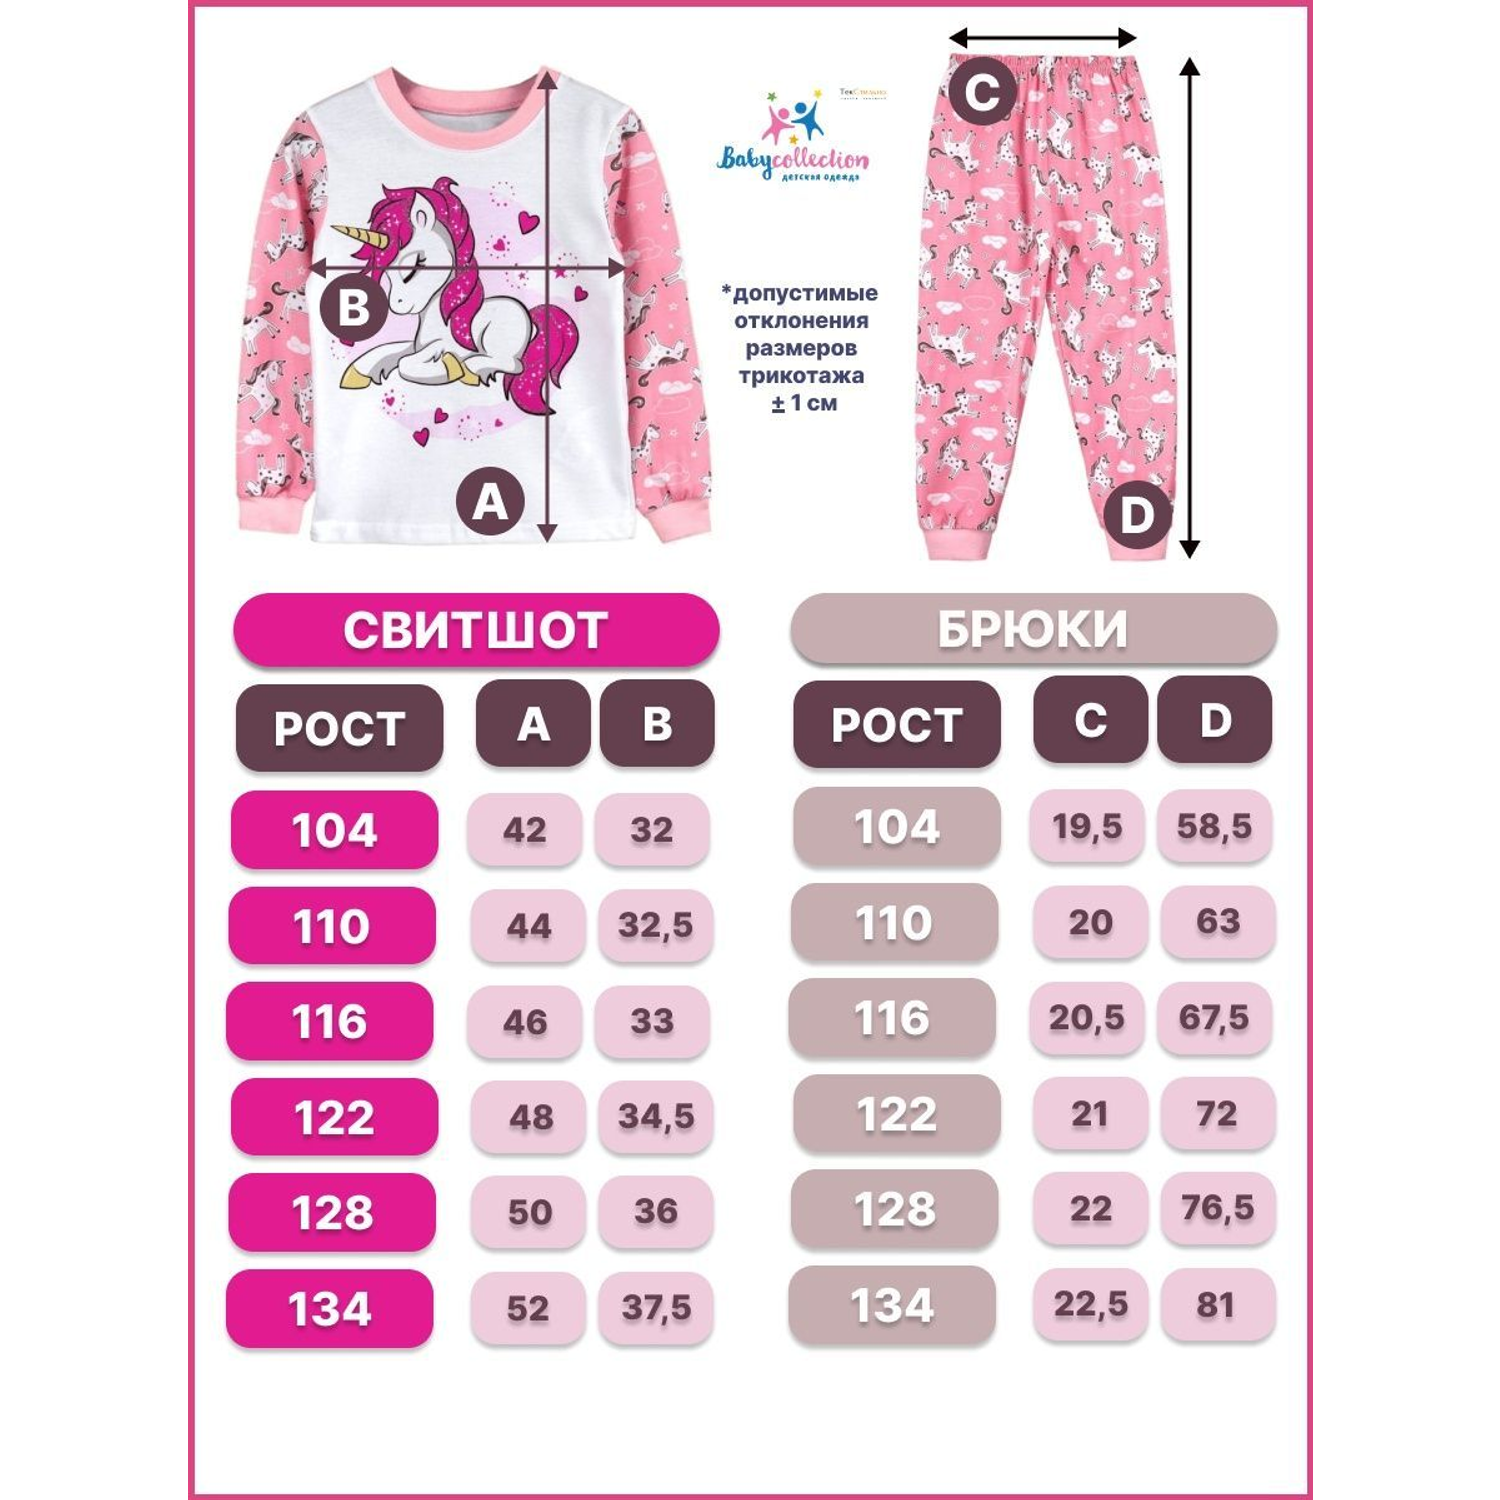 Пижама Babycollection 603/pjm001/sph/k1/013/p1/W*dбелый розовый - фото 2